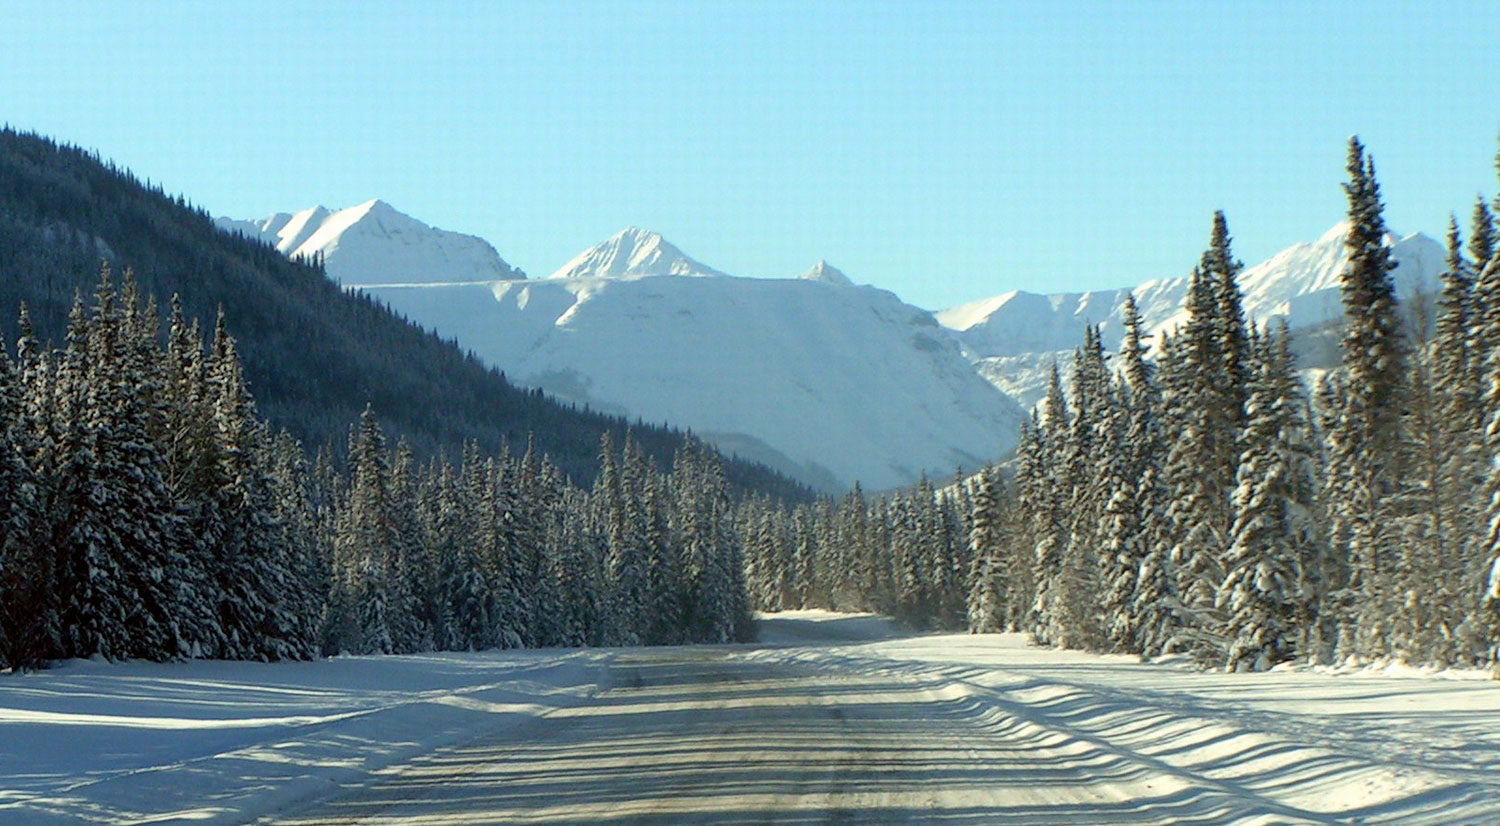 Alaska Highway (Alcan Highway) is completed through Canada to Fairbanks, Alaska